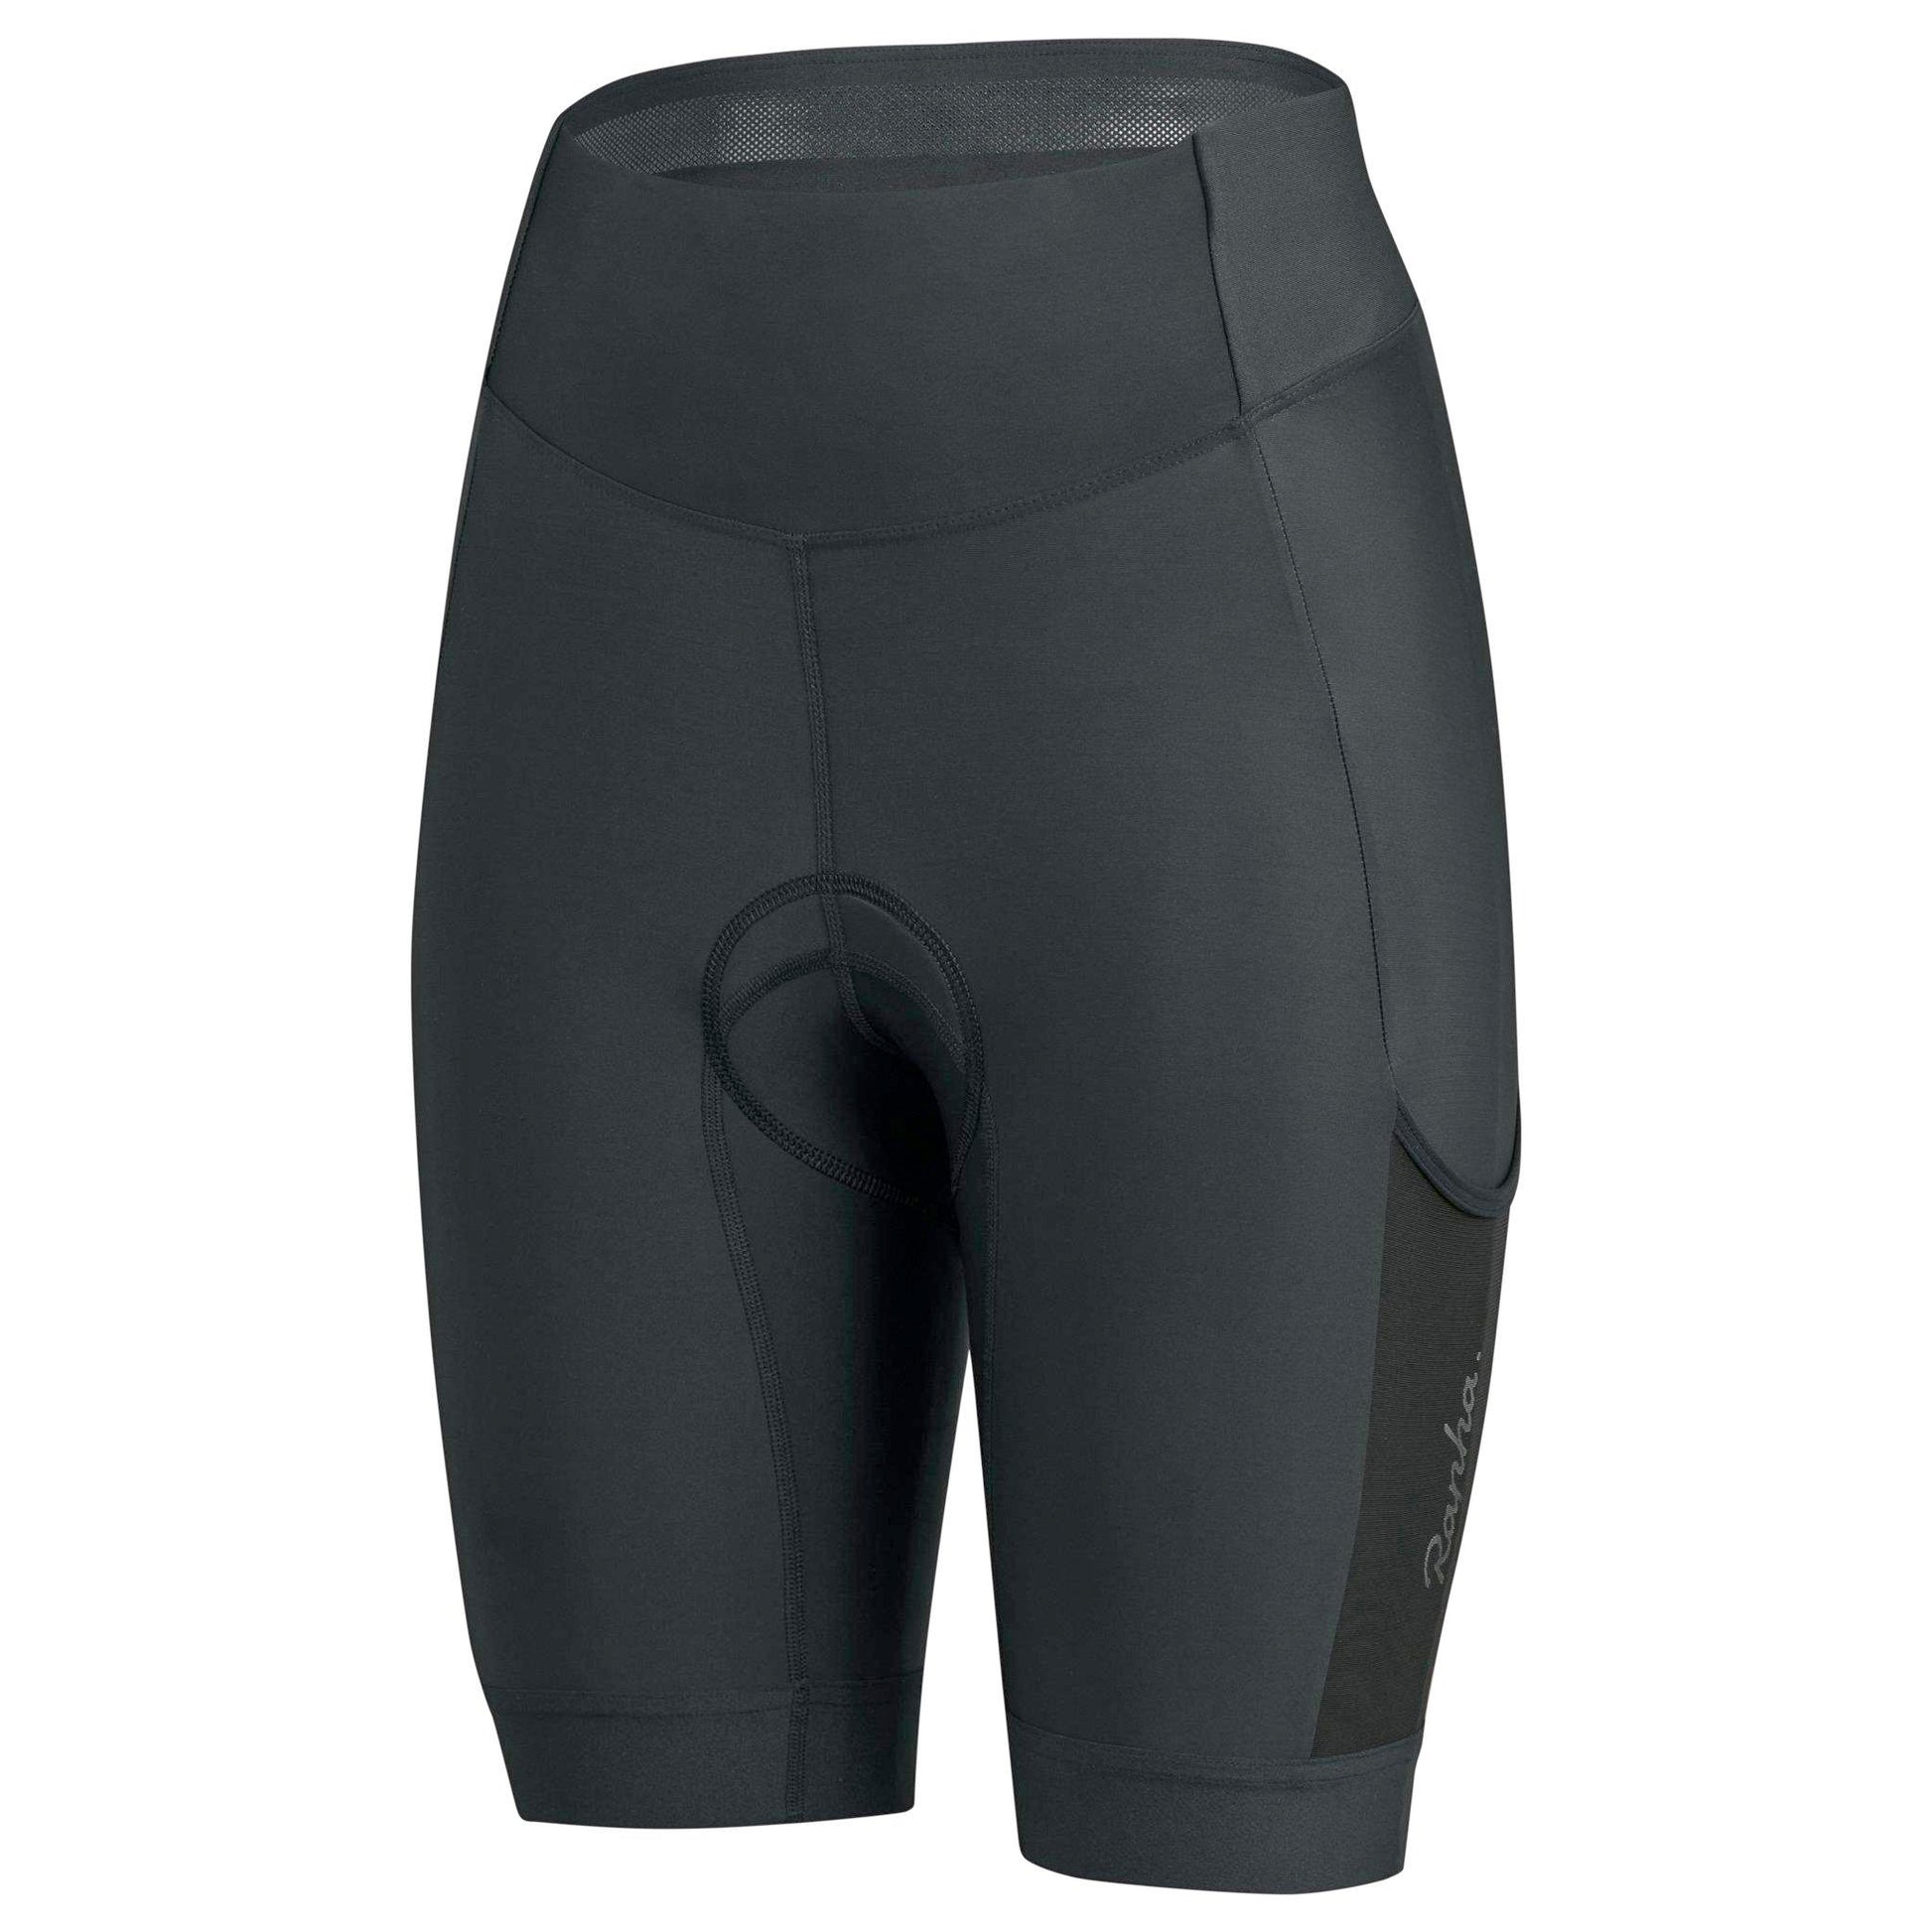 Rapha Women's Core Cargo Shorts - Black buy at Woolys Wheels bike shop Sydney